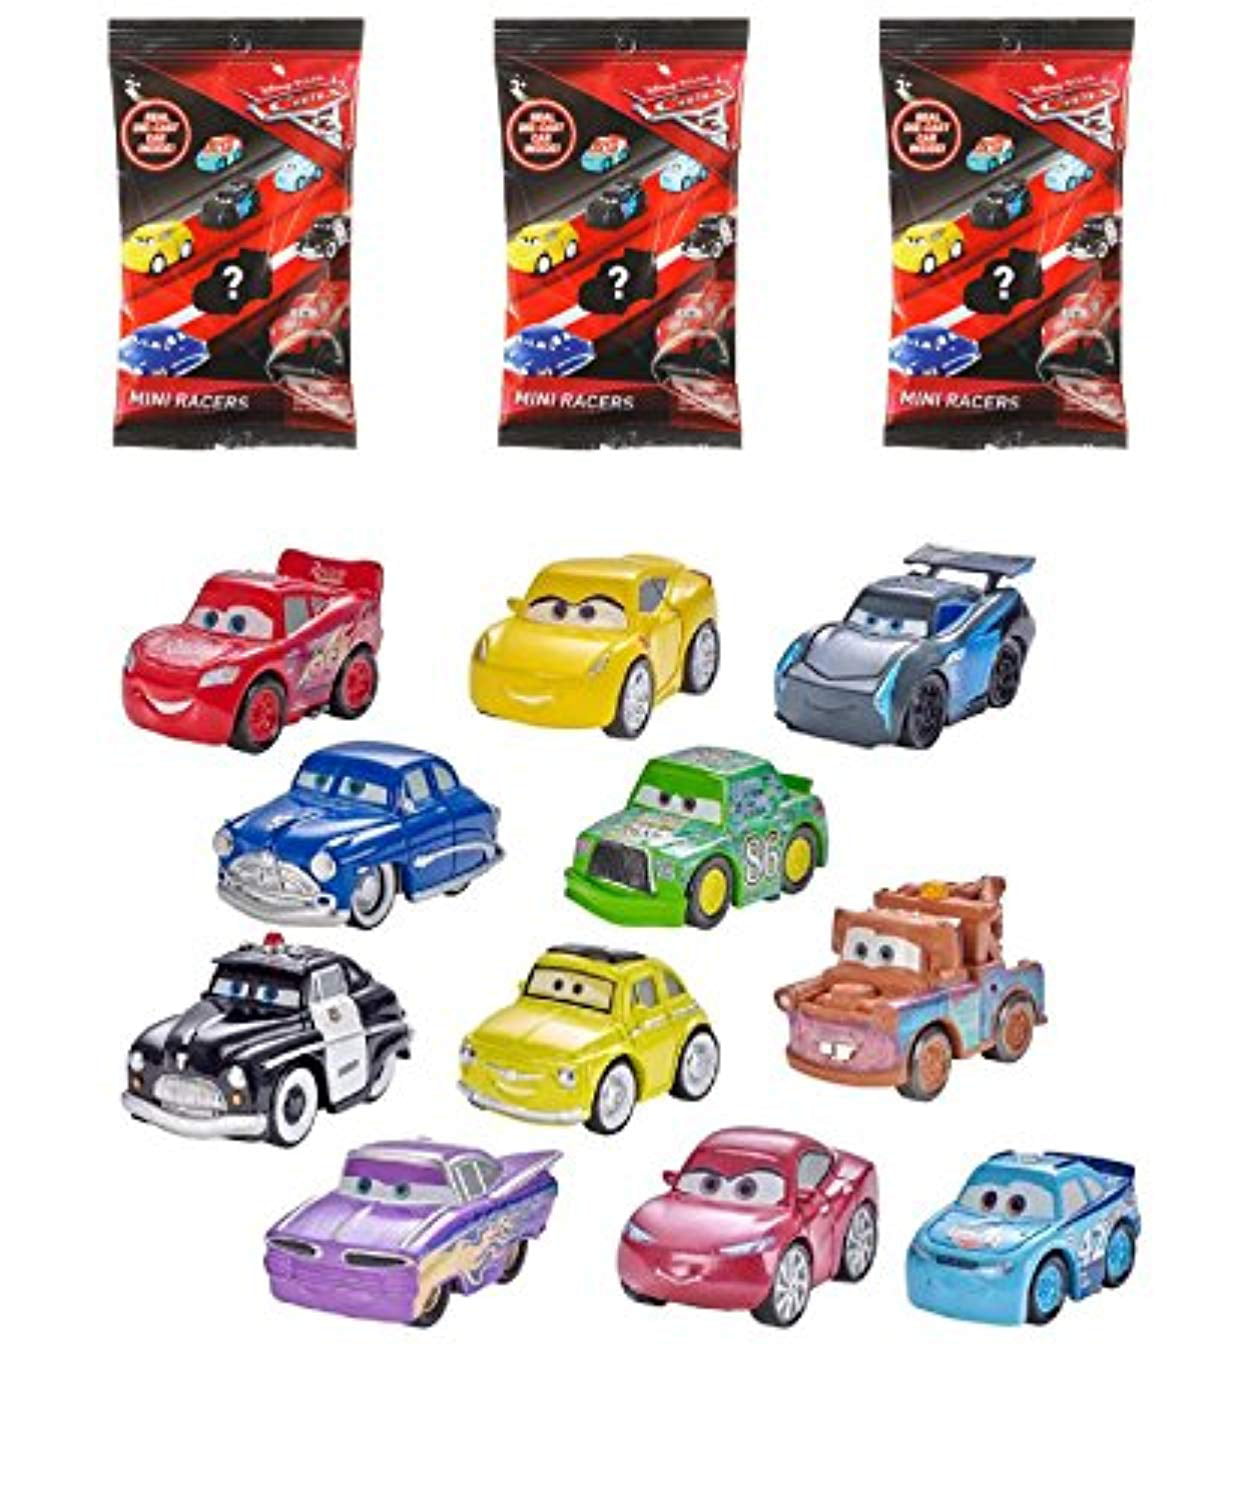 Disney Pixar Cars 3 MINI RACERS Die-Cast Car Blind Bag Lot of 3 Three #1 to #14 